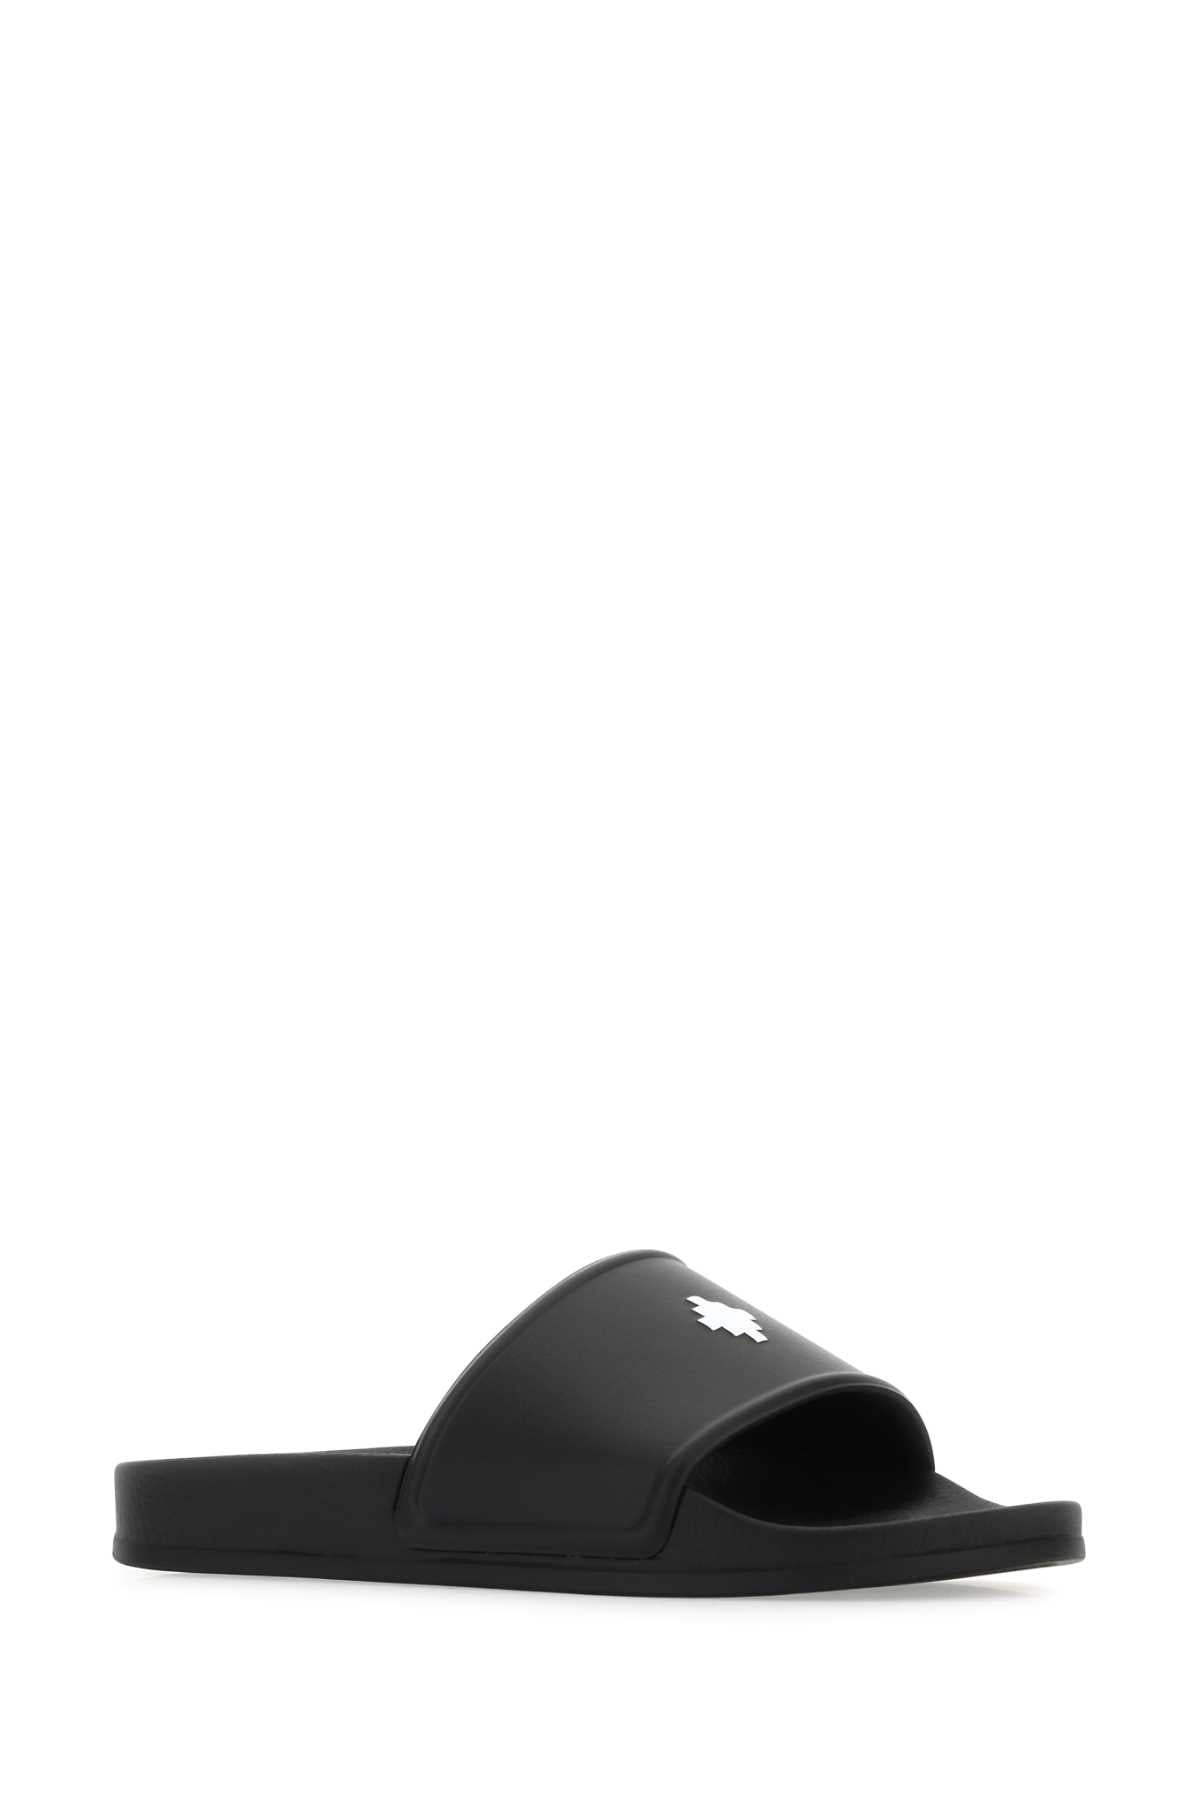 BURLON Black rubber slippers - Walmart.com